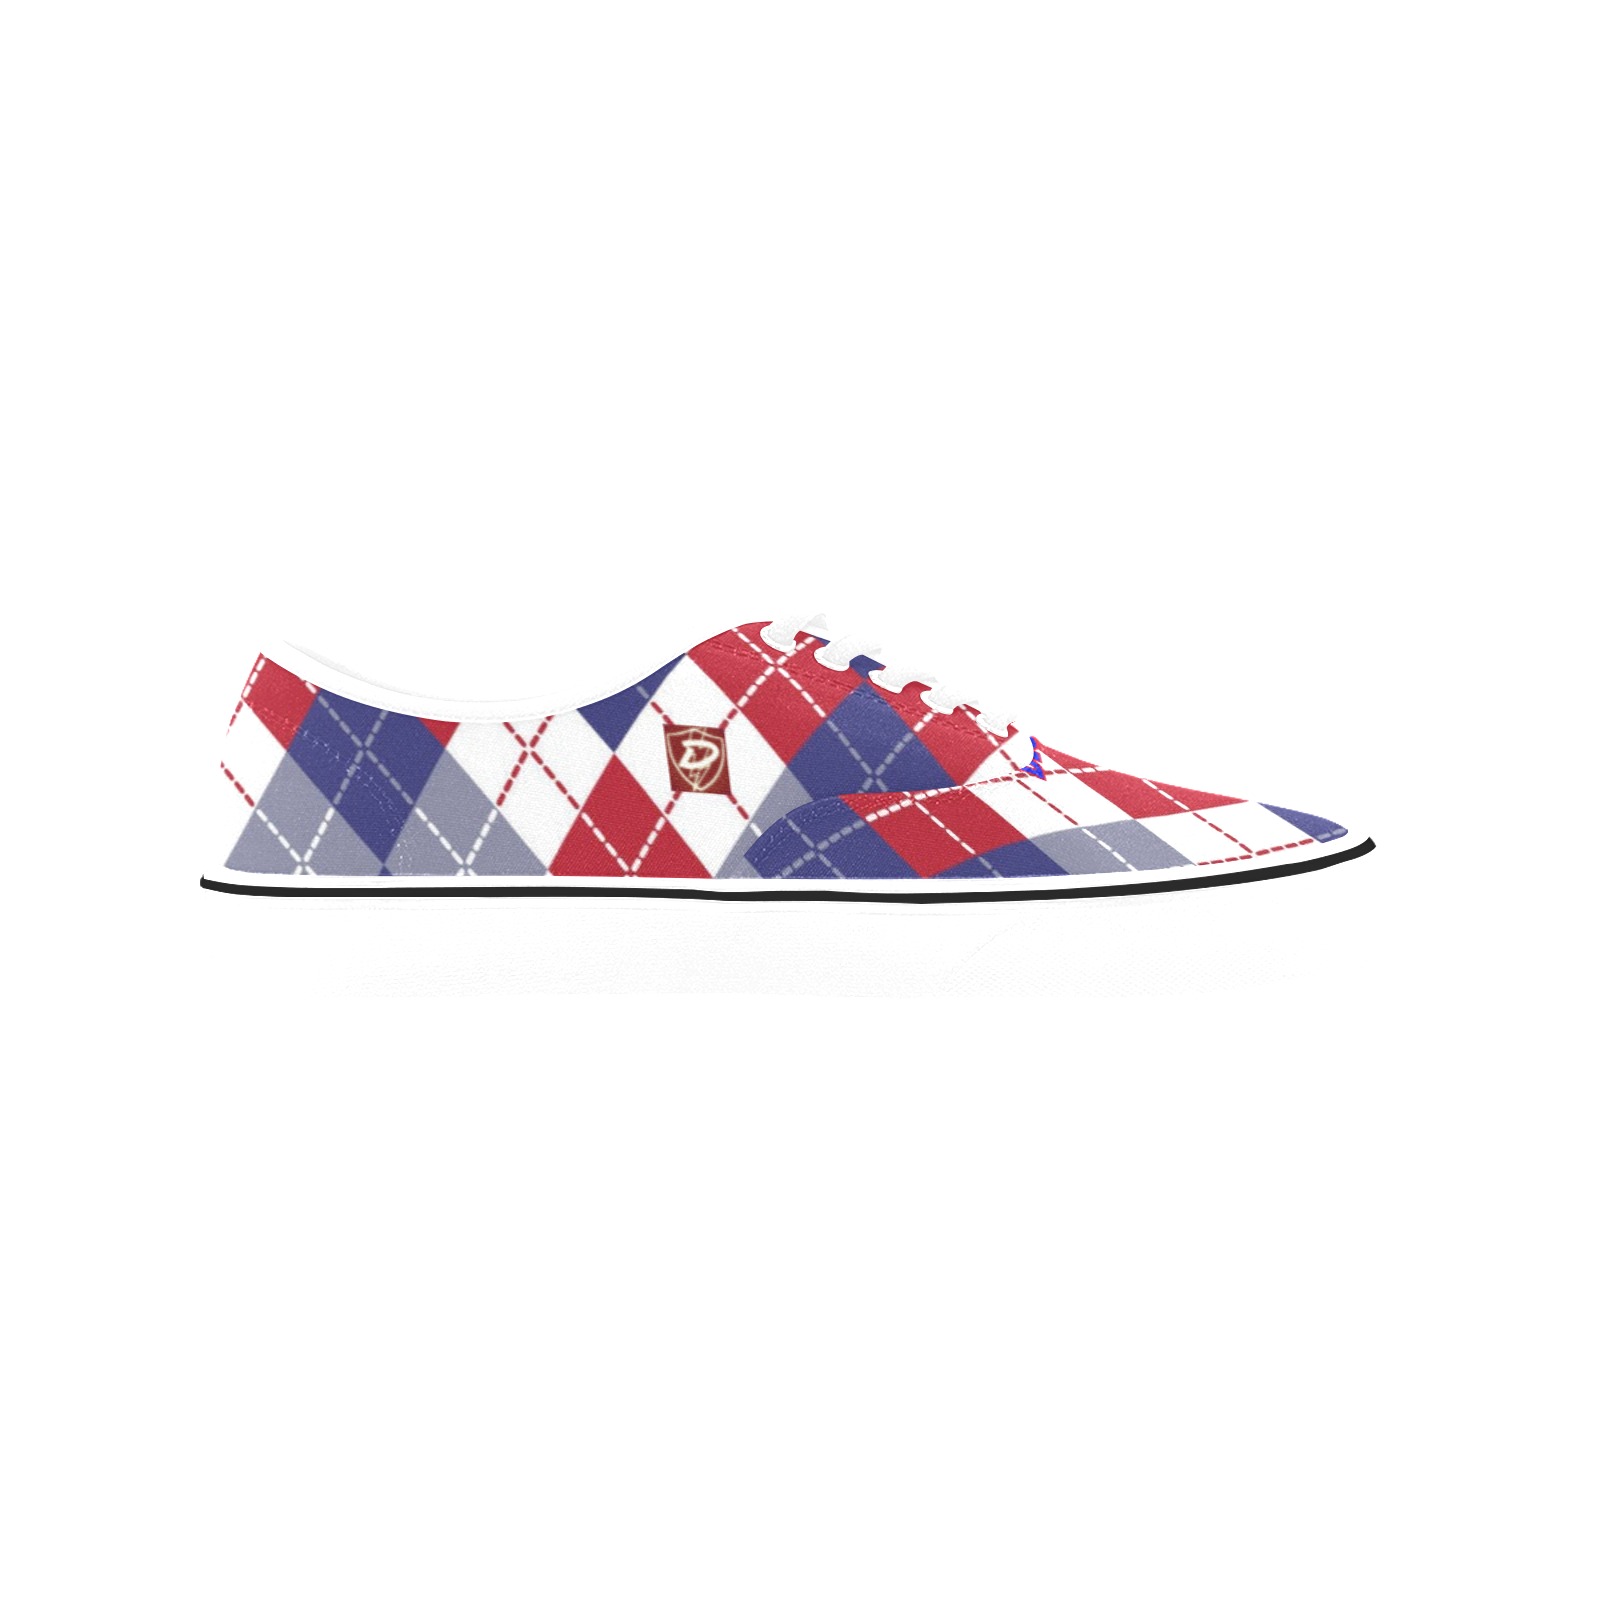 DIONIO - Red,White & Blue Argyle Casual Classic Canvas Low Top Shoes Classic Men's Canvas Low Top Shoes (Model E001-4)